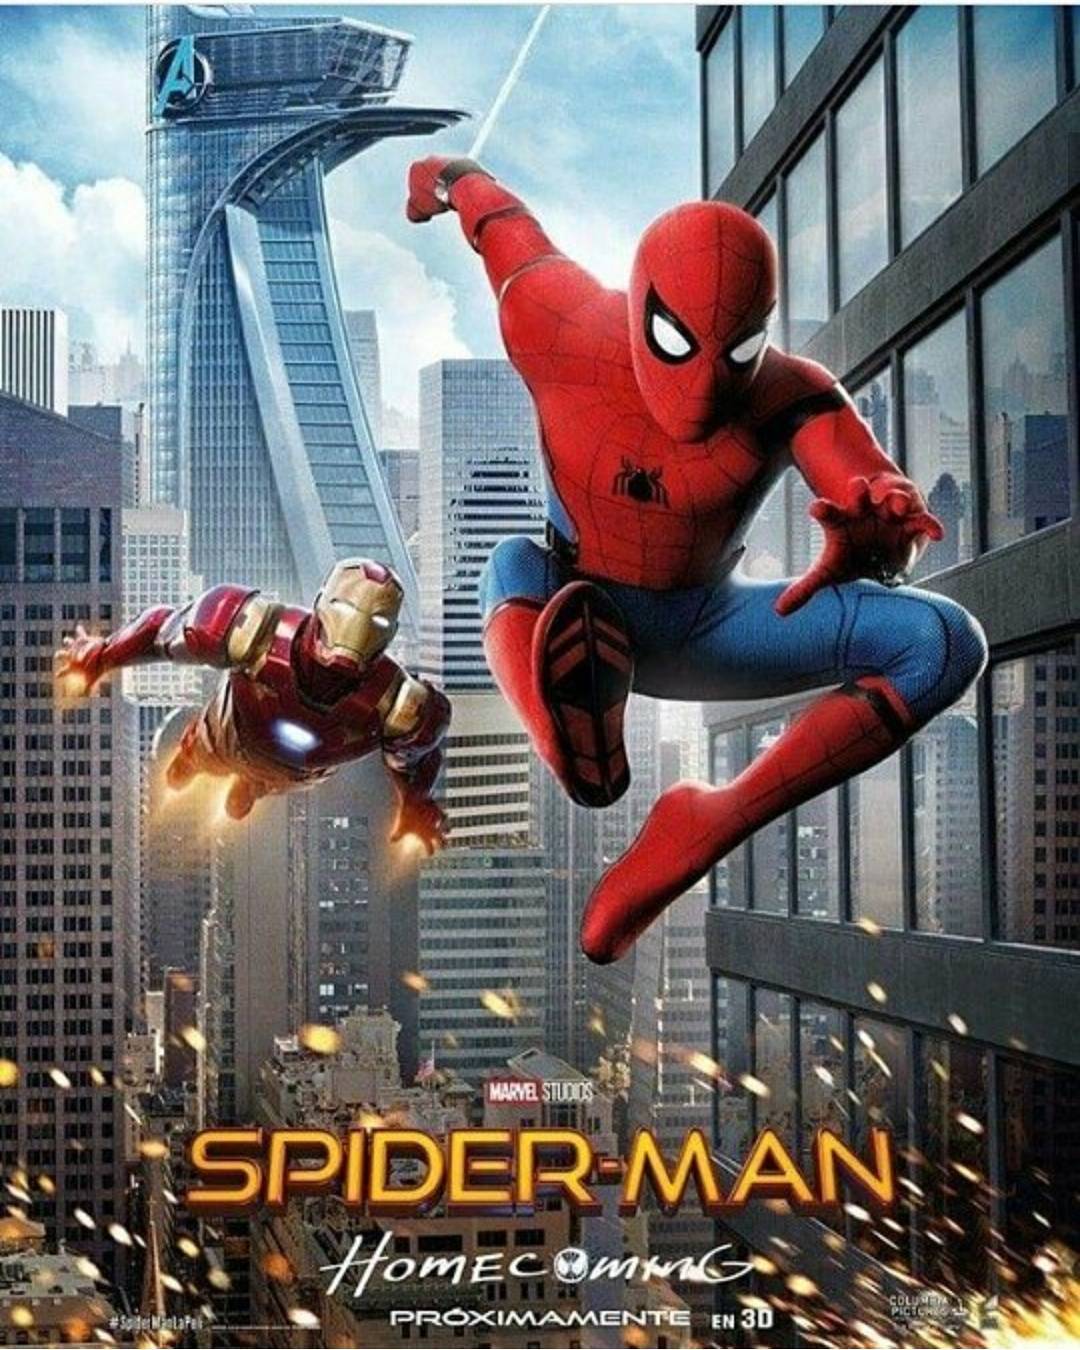 Spiderman Homecoming Wallpaper & Stills 2017. HD IMAGES 1080p